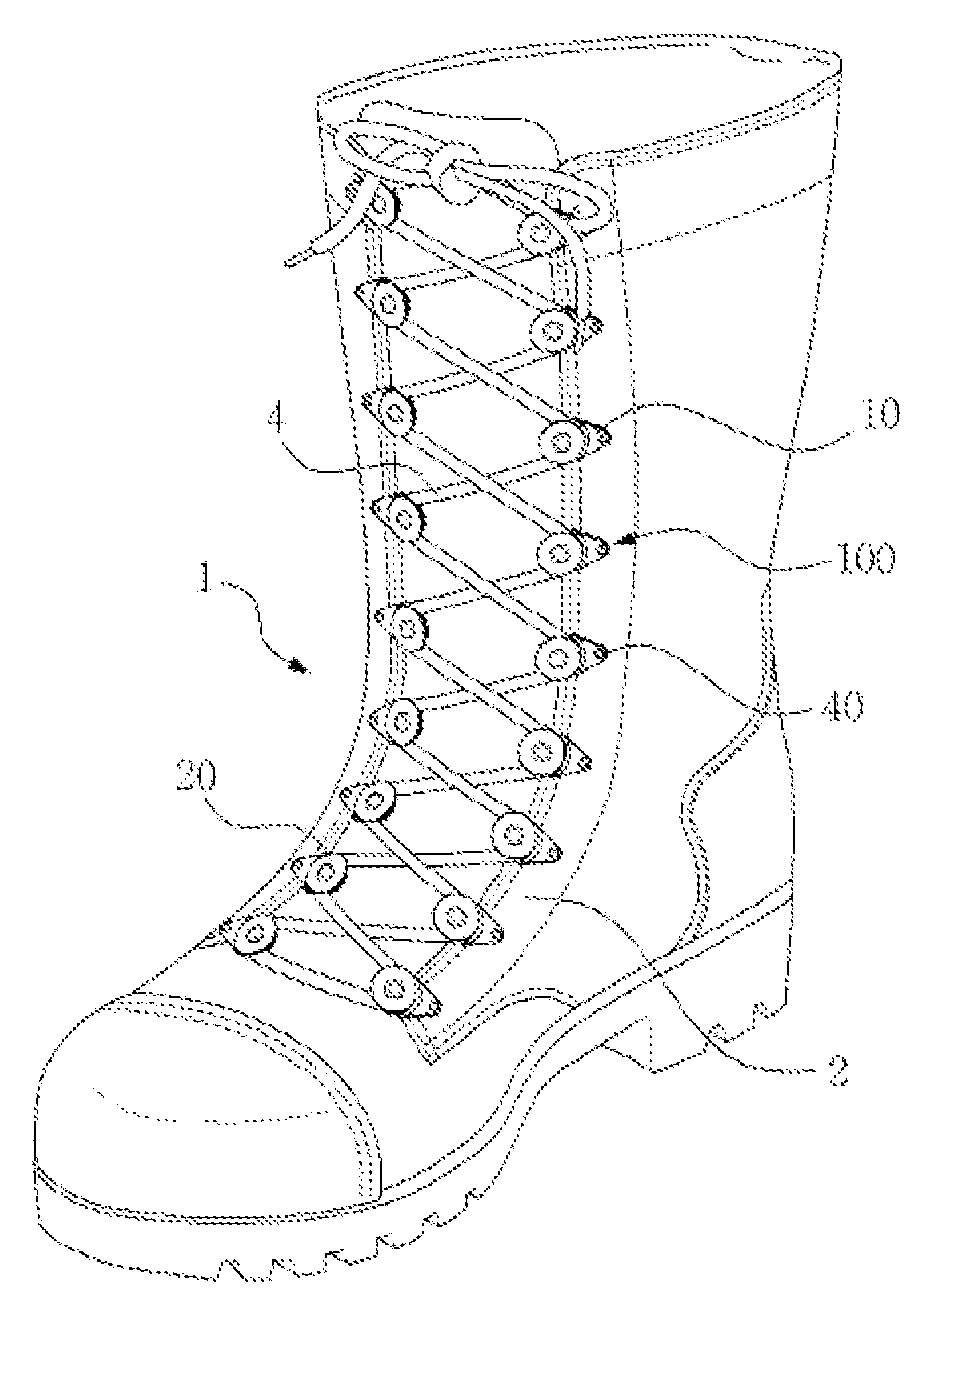 Loop for shoelace utilizing asymmetric pulley